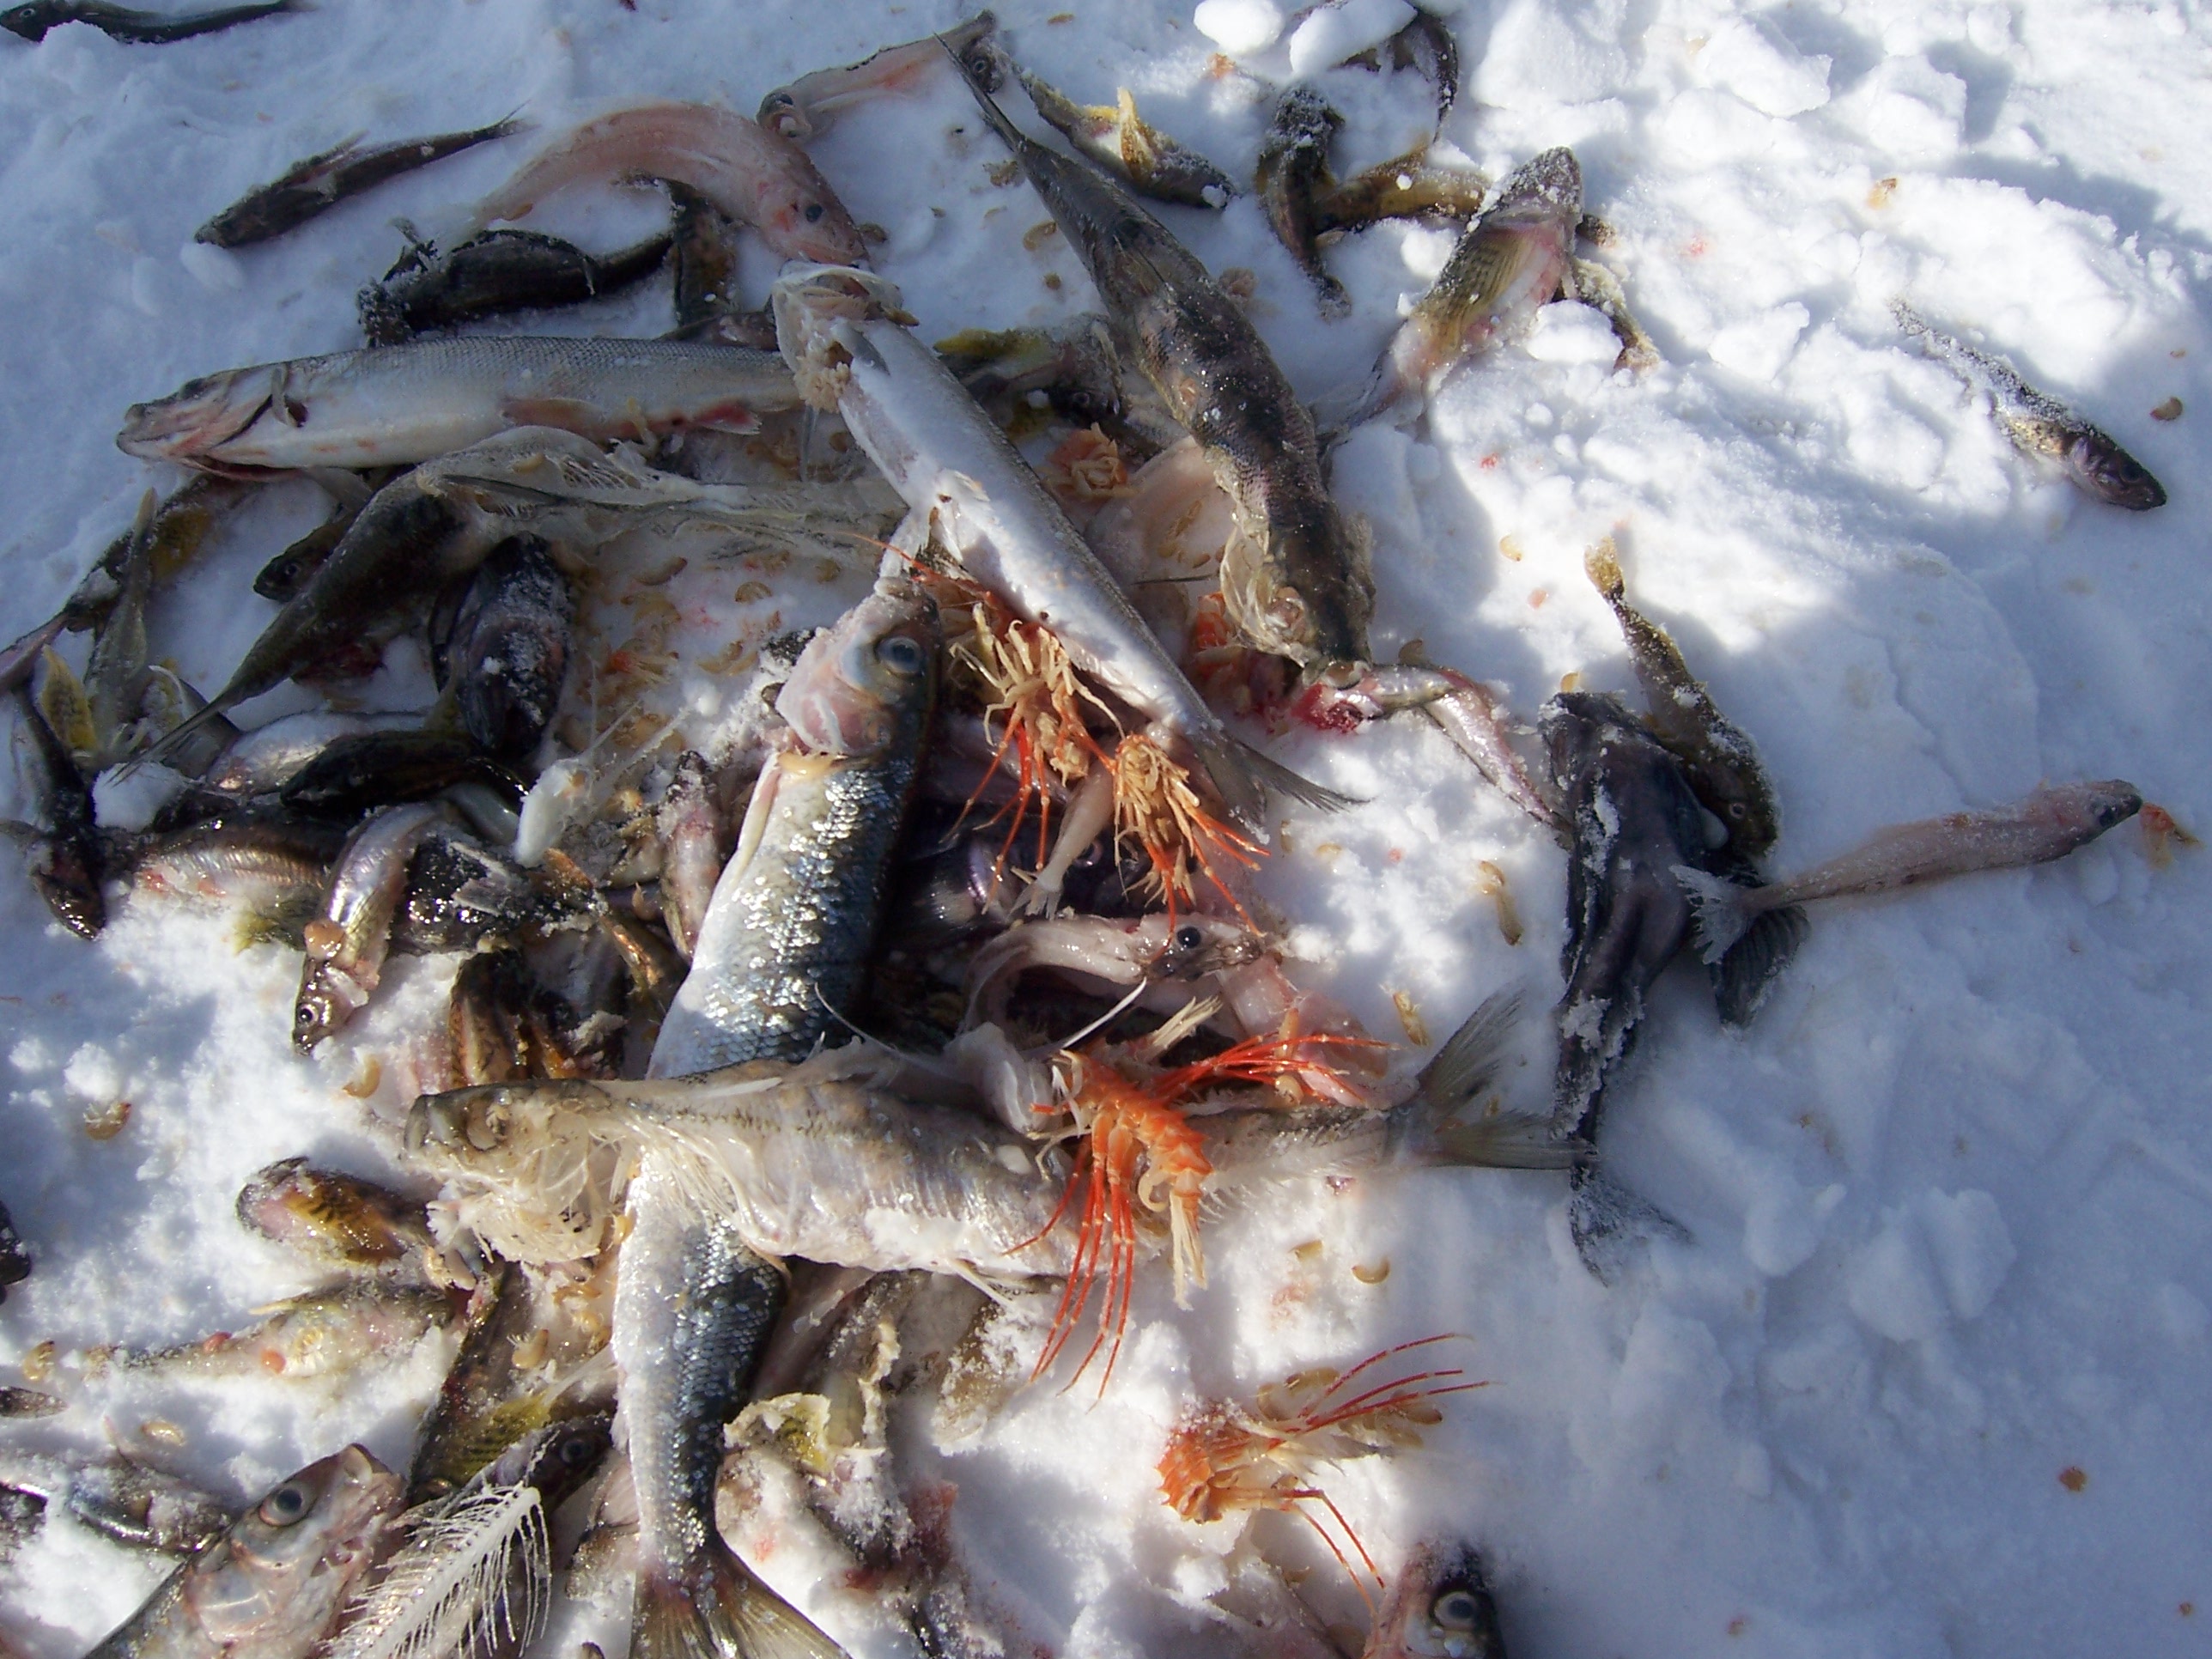 File:Ice-fishing on Baikal 4.jpg - Wikimedia Commons